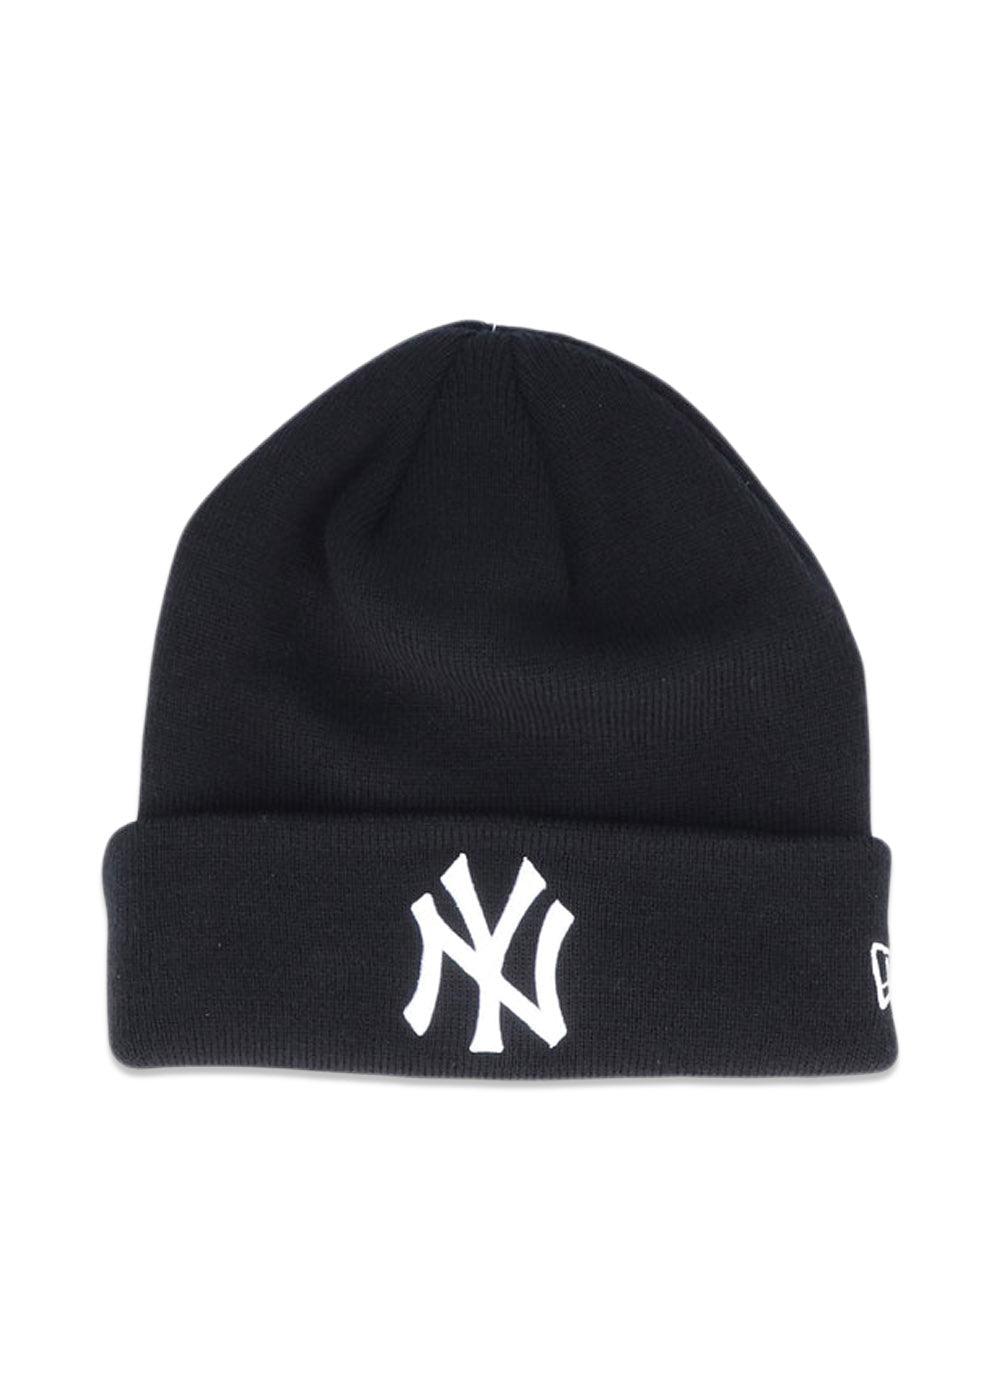 New Eras Yankees beanie - Black. Køb huer her.